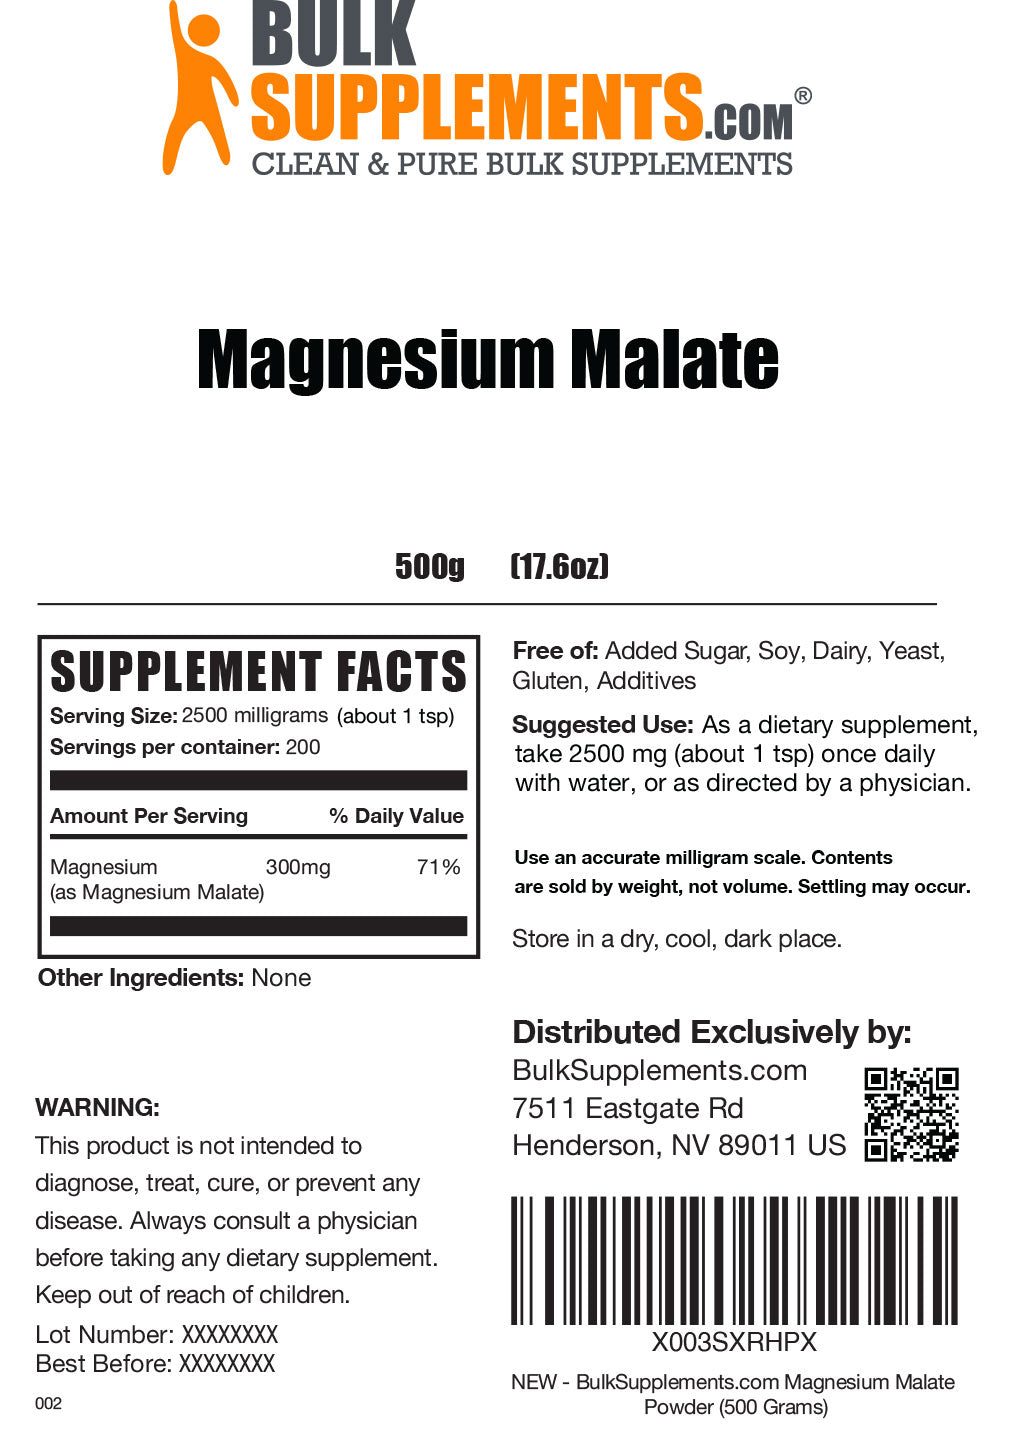 Magnesium Malate Label 500g